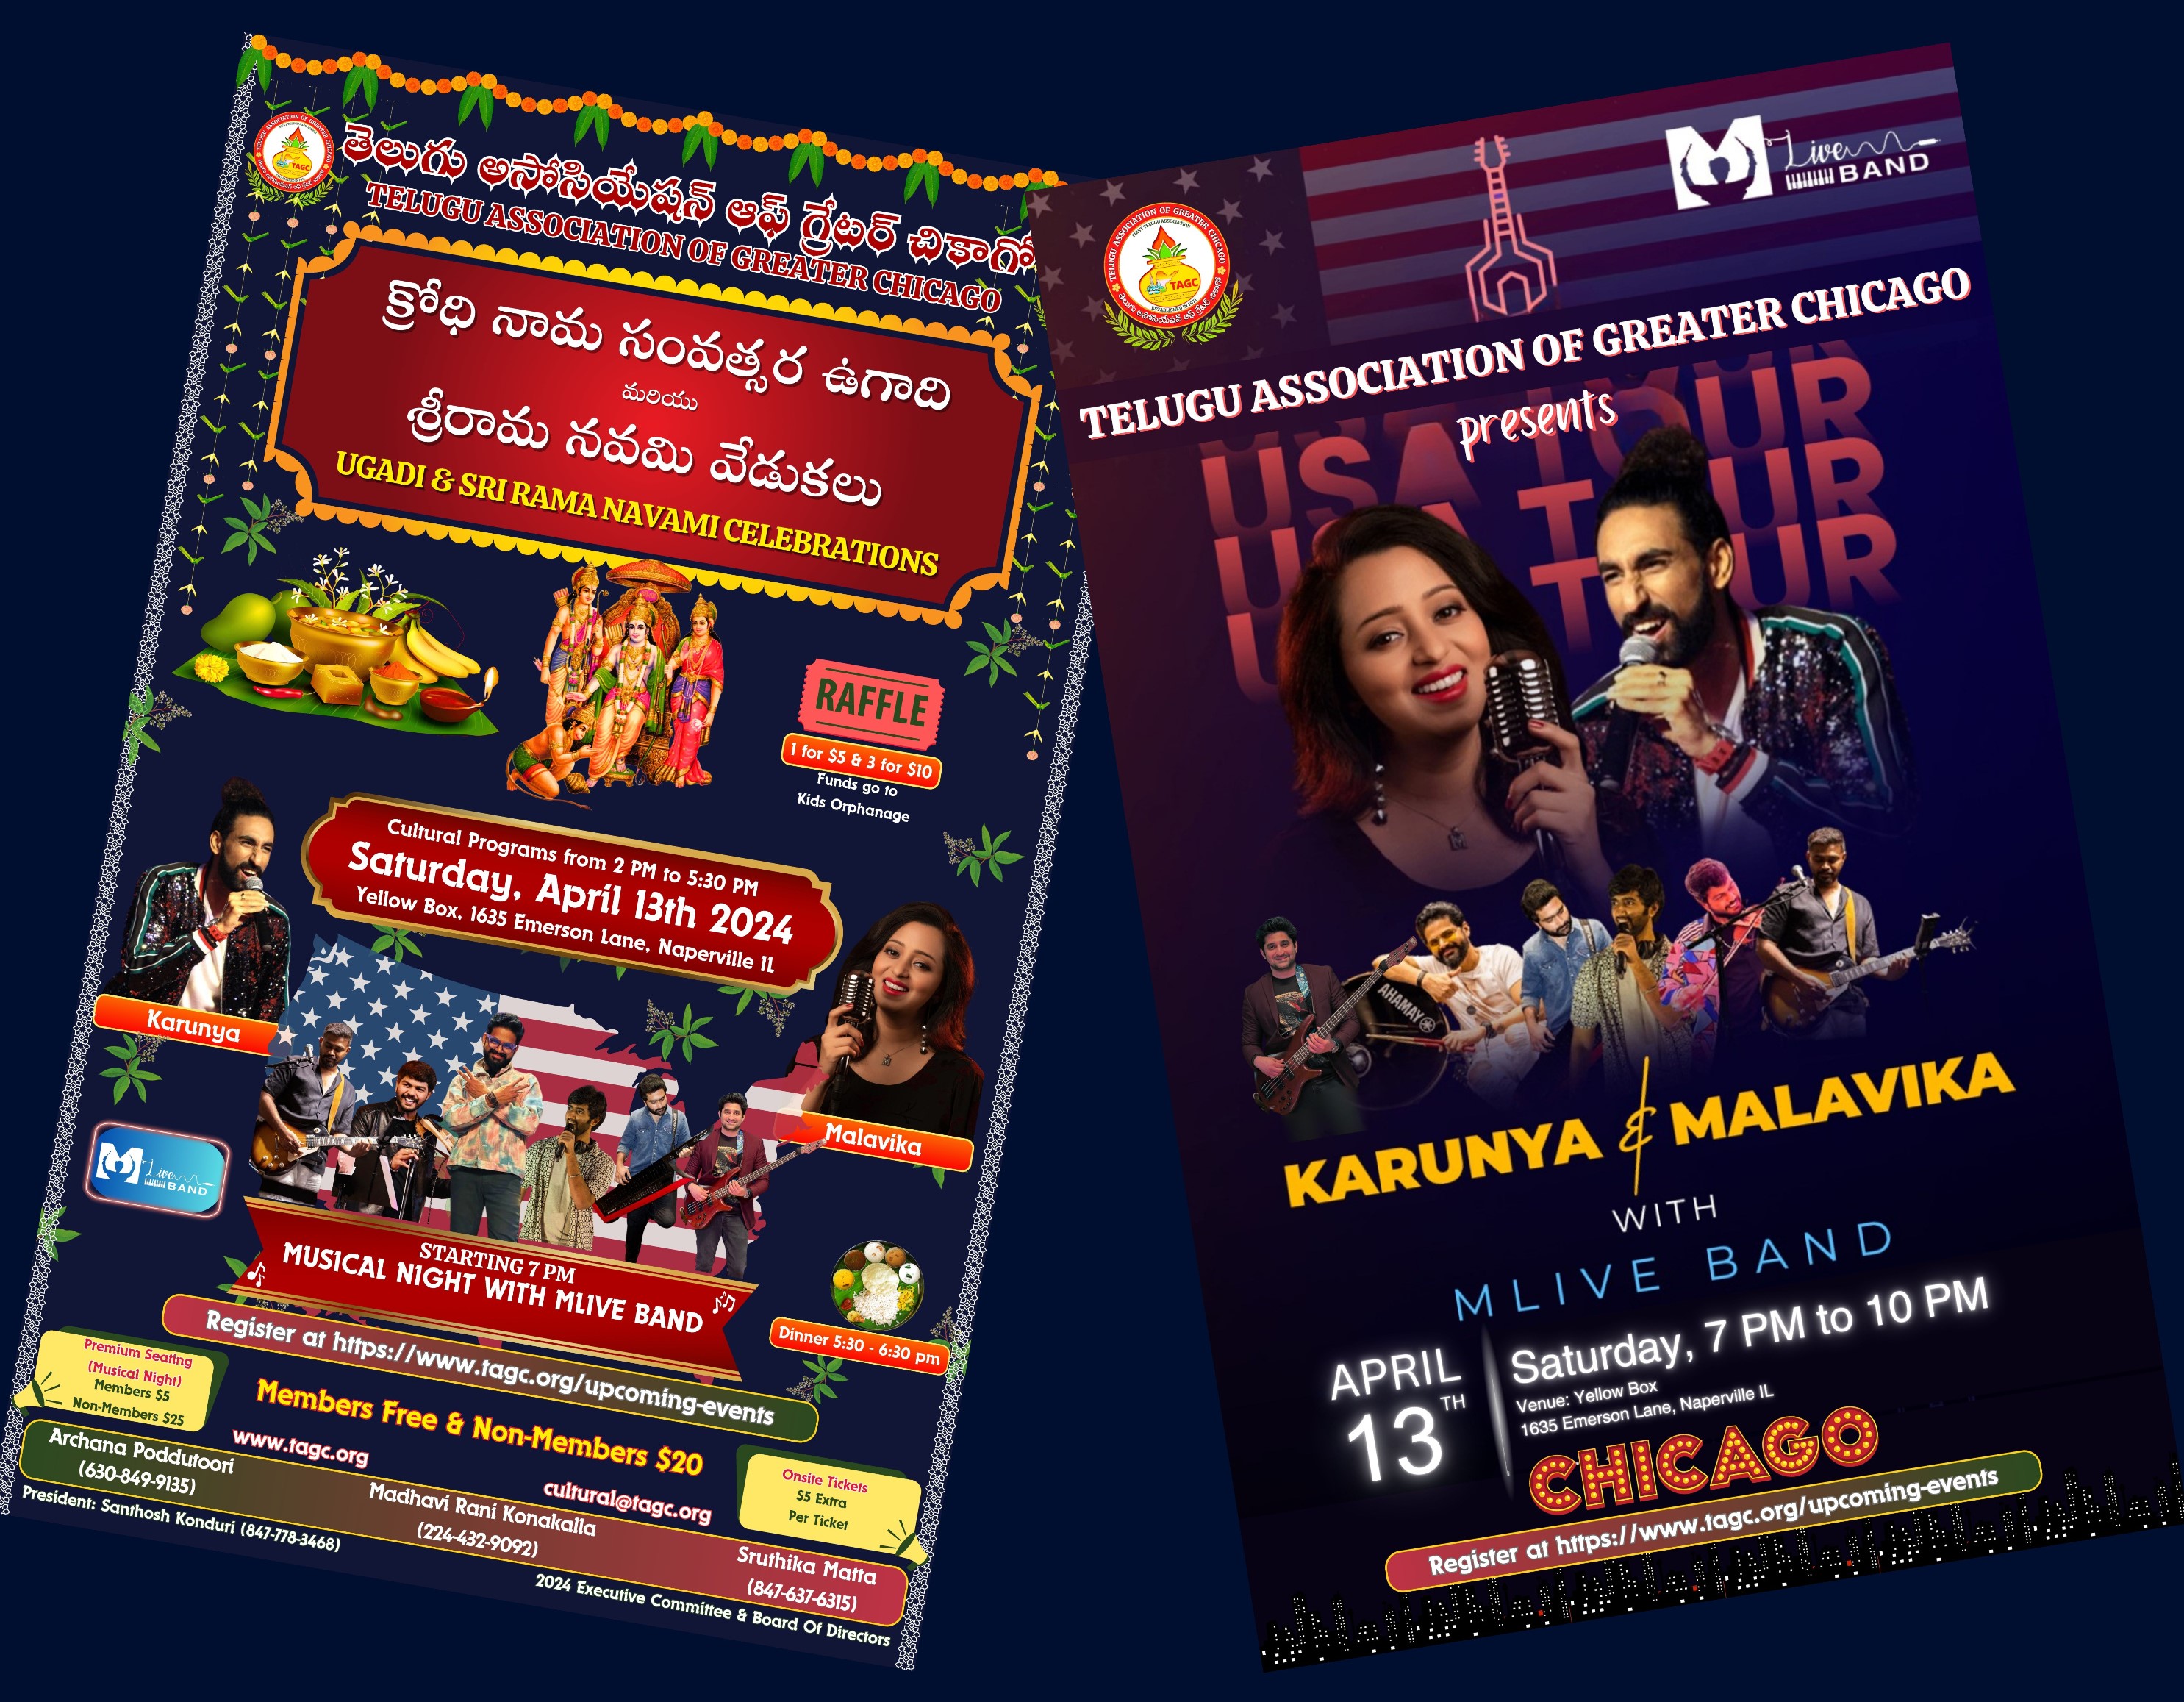 Karunya and Malvika Musical Night - TAGC Ugadi & SriRama Navami Celebrations